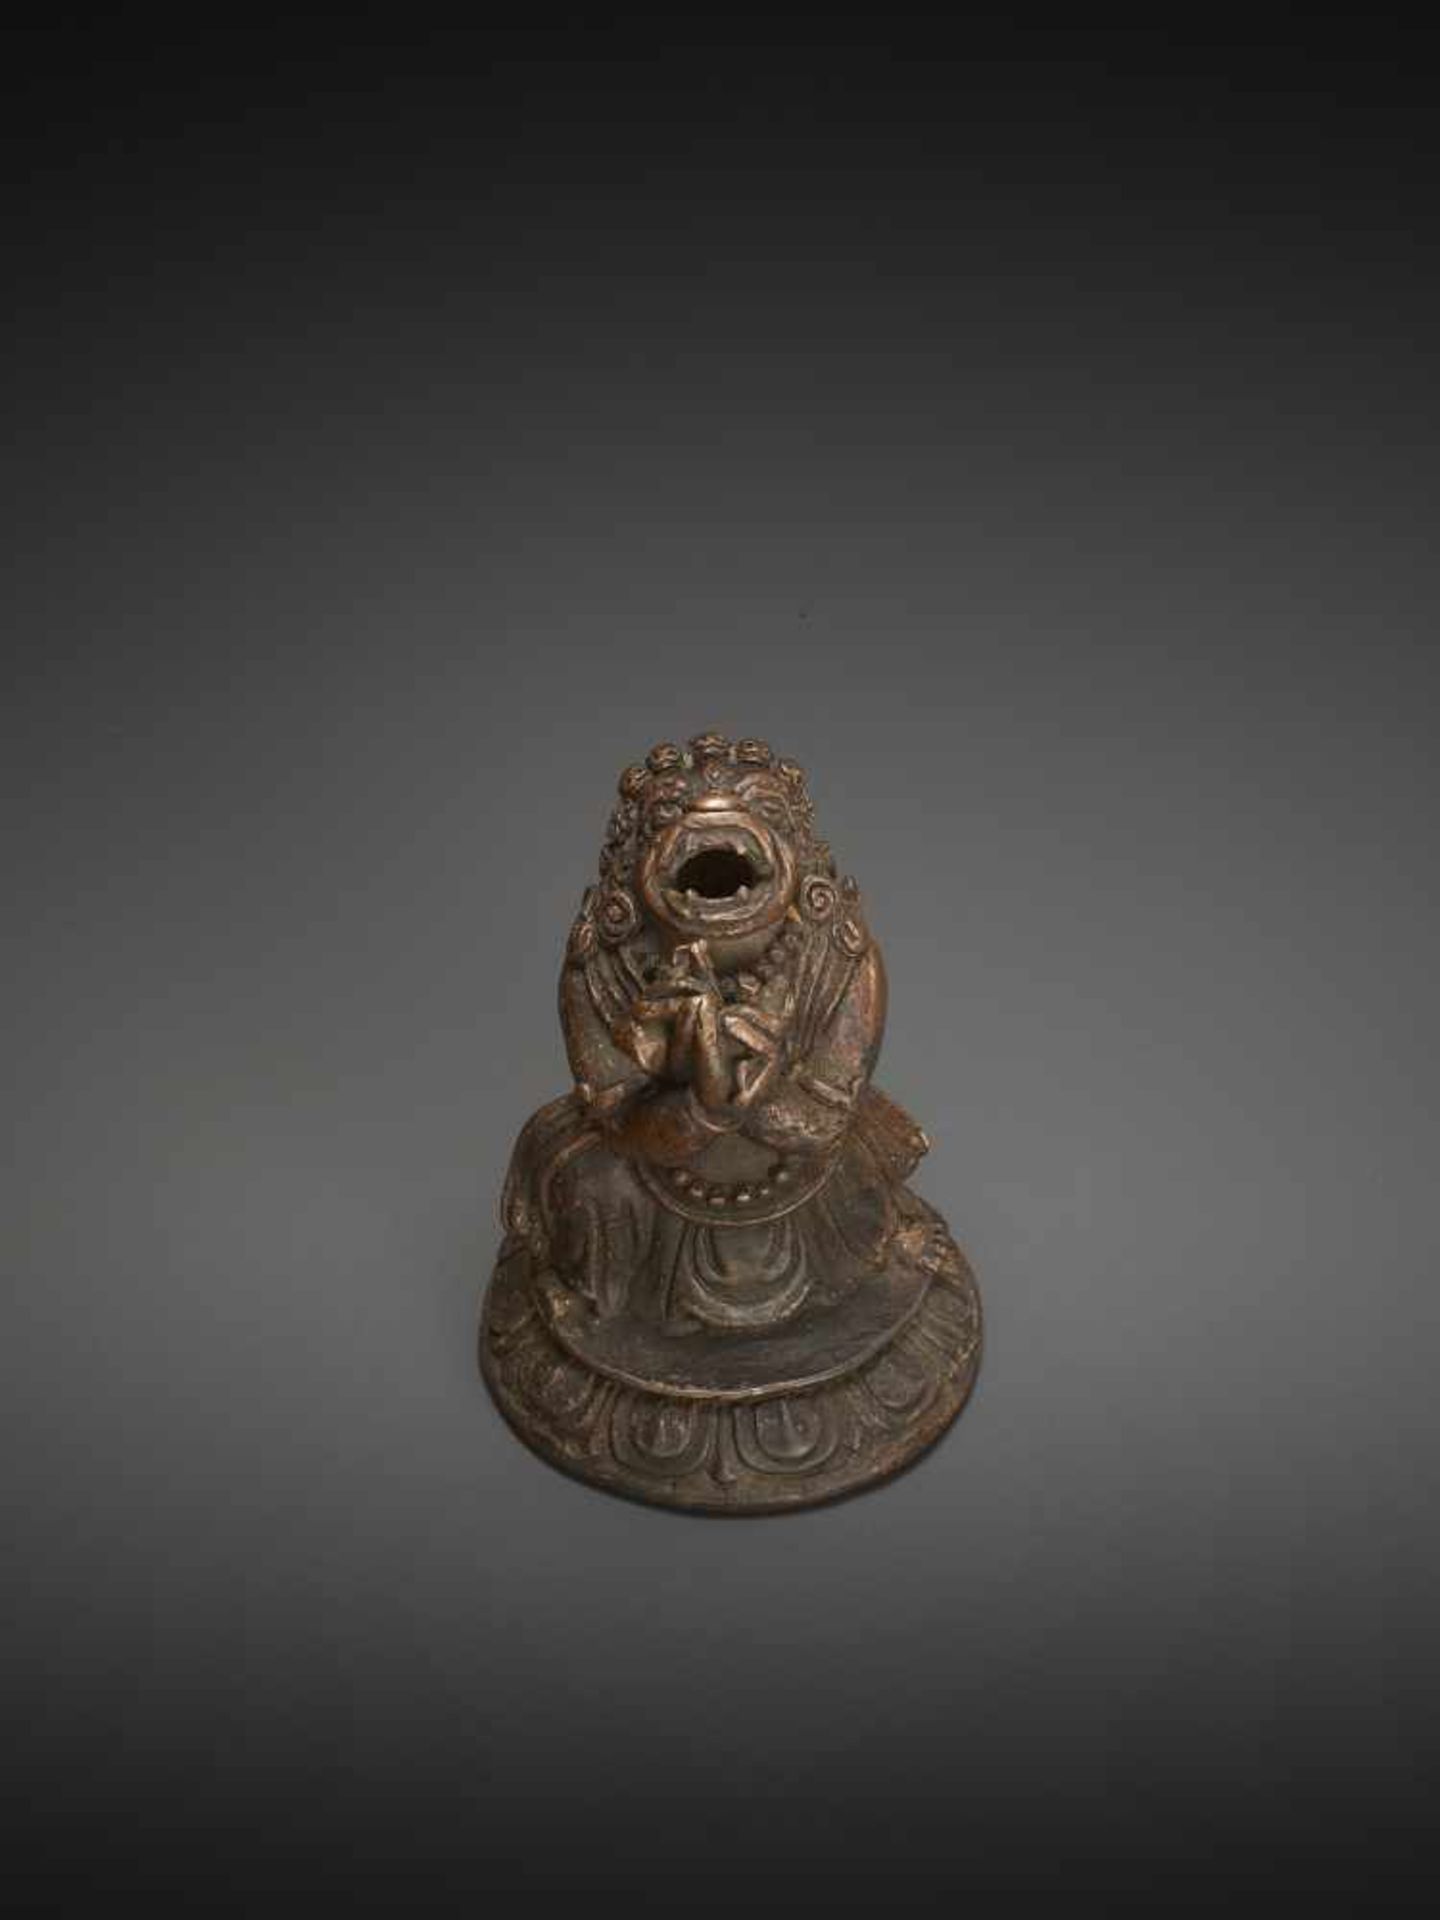 A WRATHFUL TANTRIC DEITY 17TH CENTURYA remarkable Tibetan copper bronze of a wrathful deity